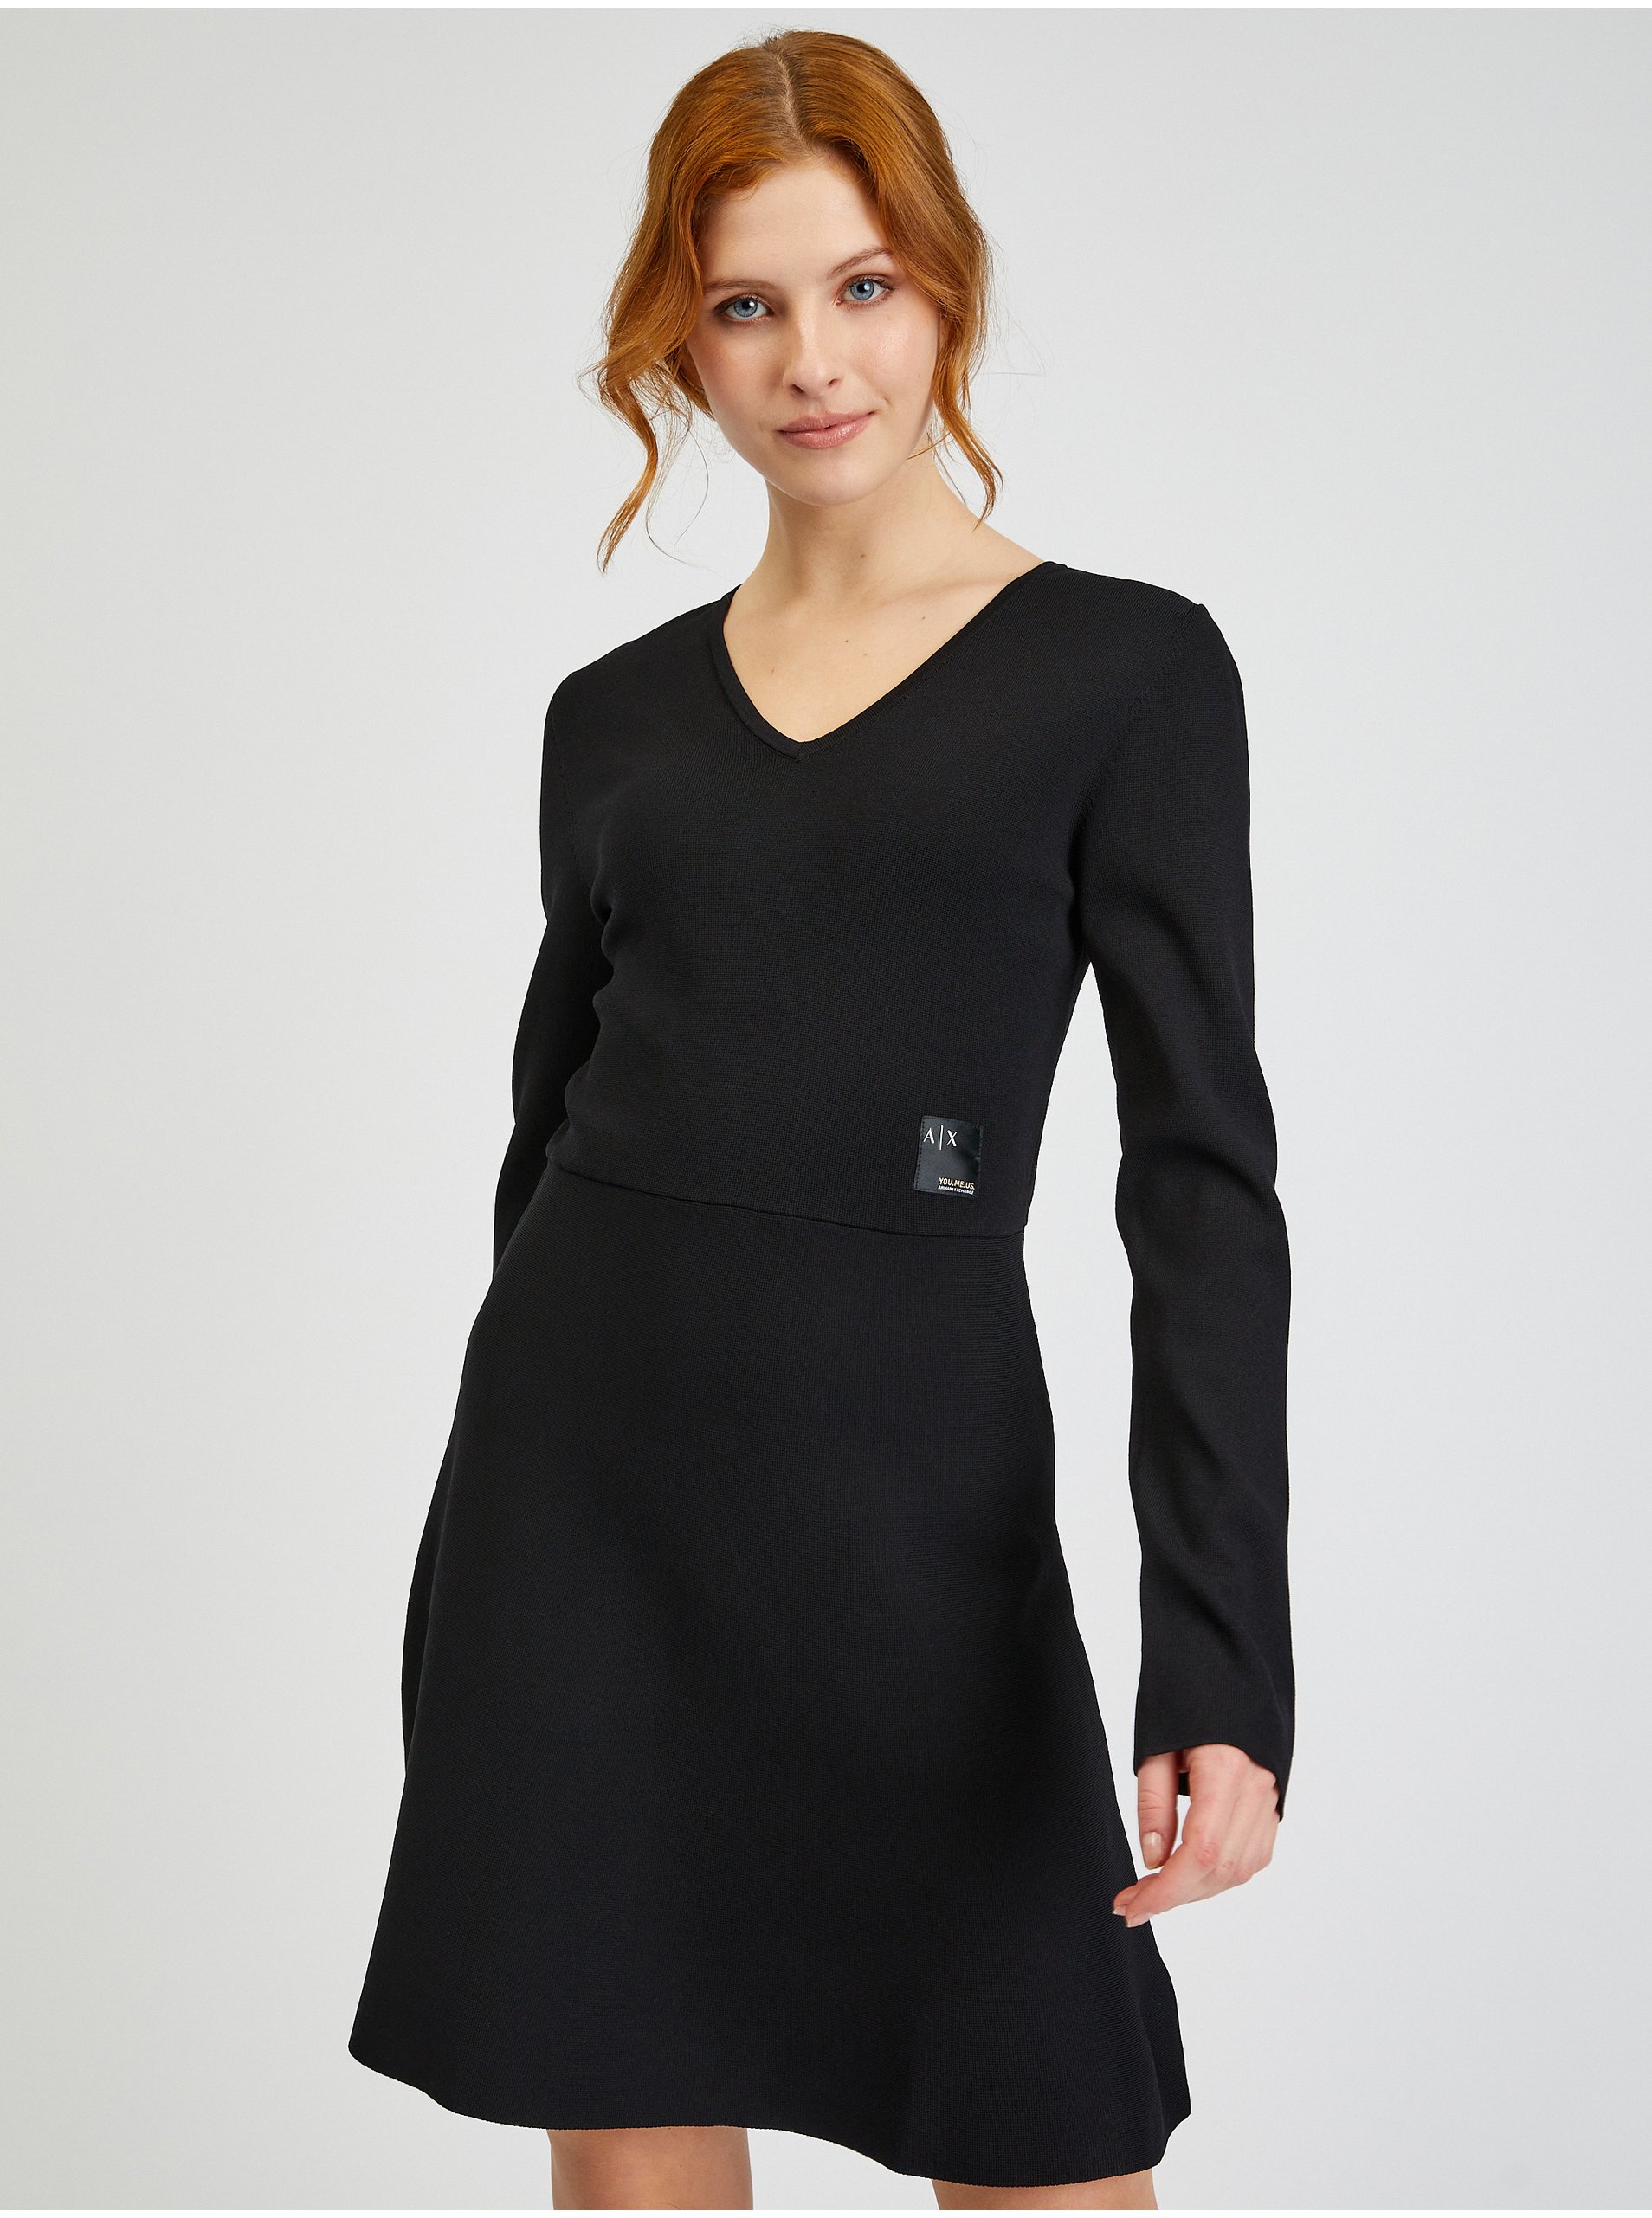 Black Women's Sweater Dress Armani Exchange - Women